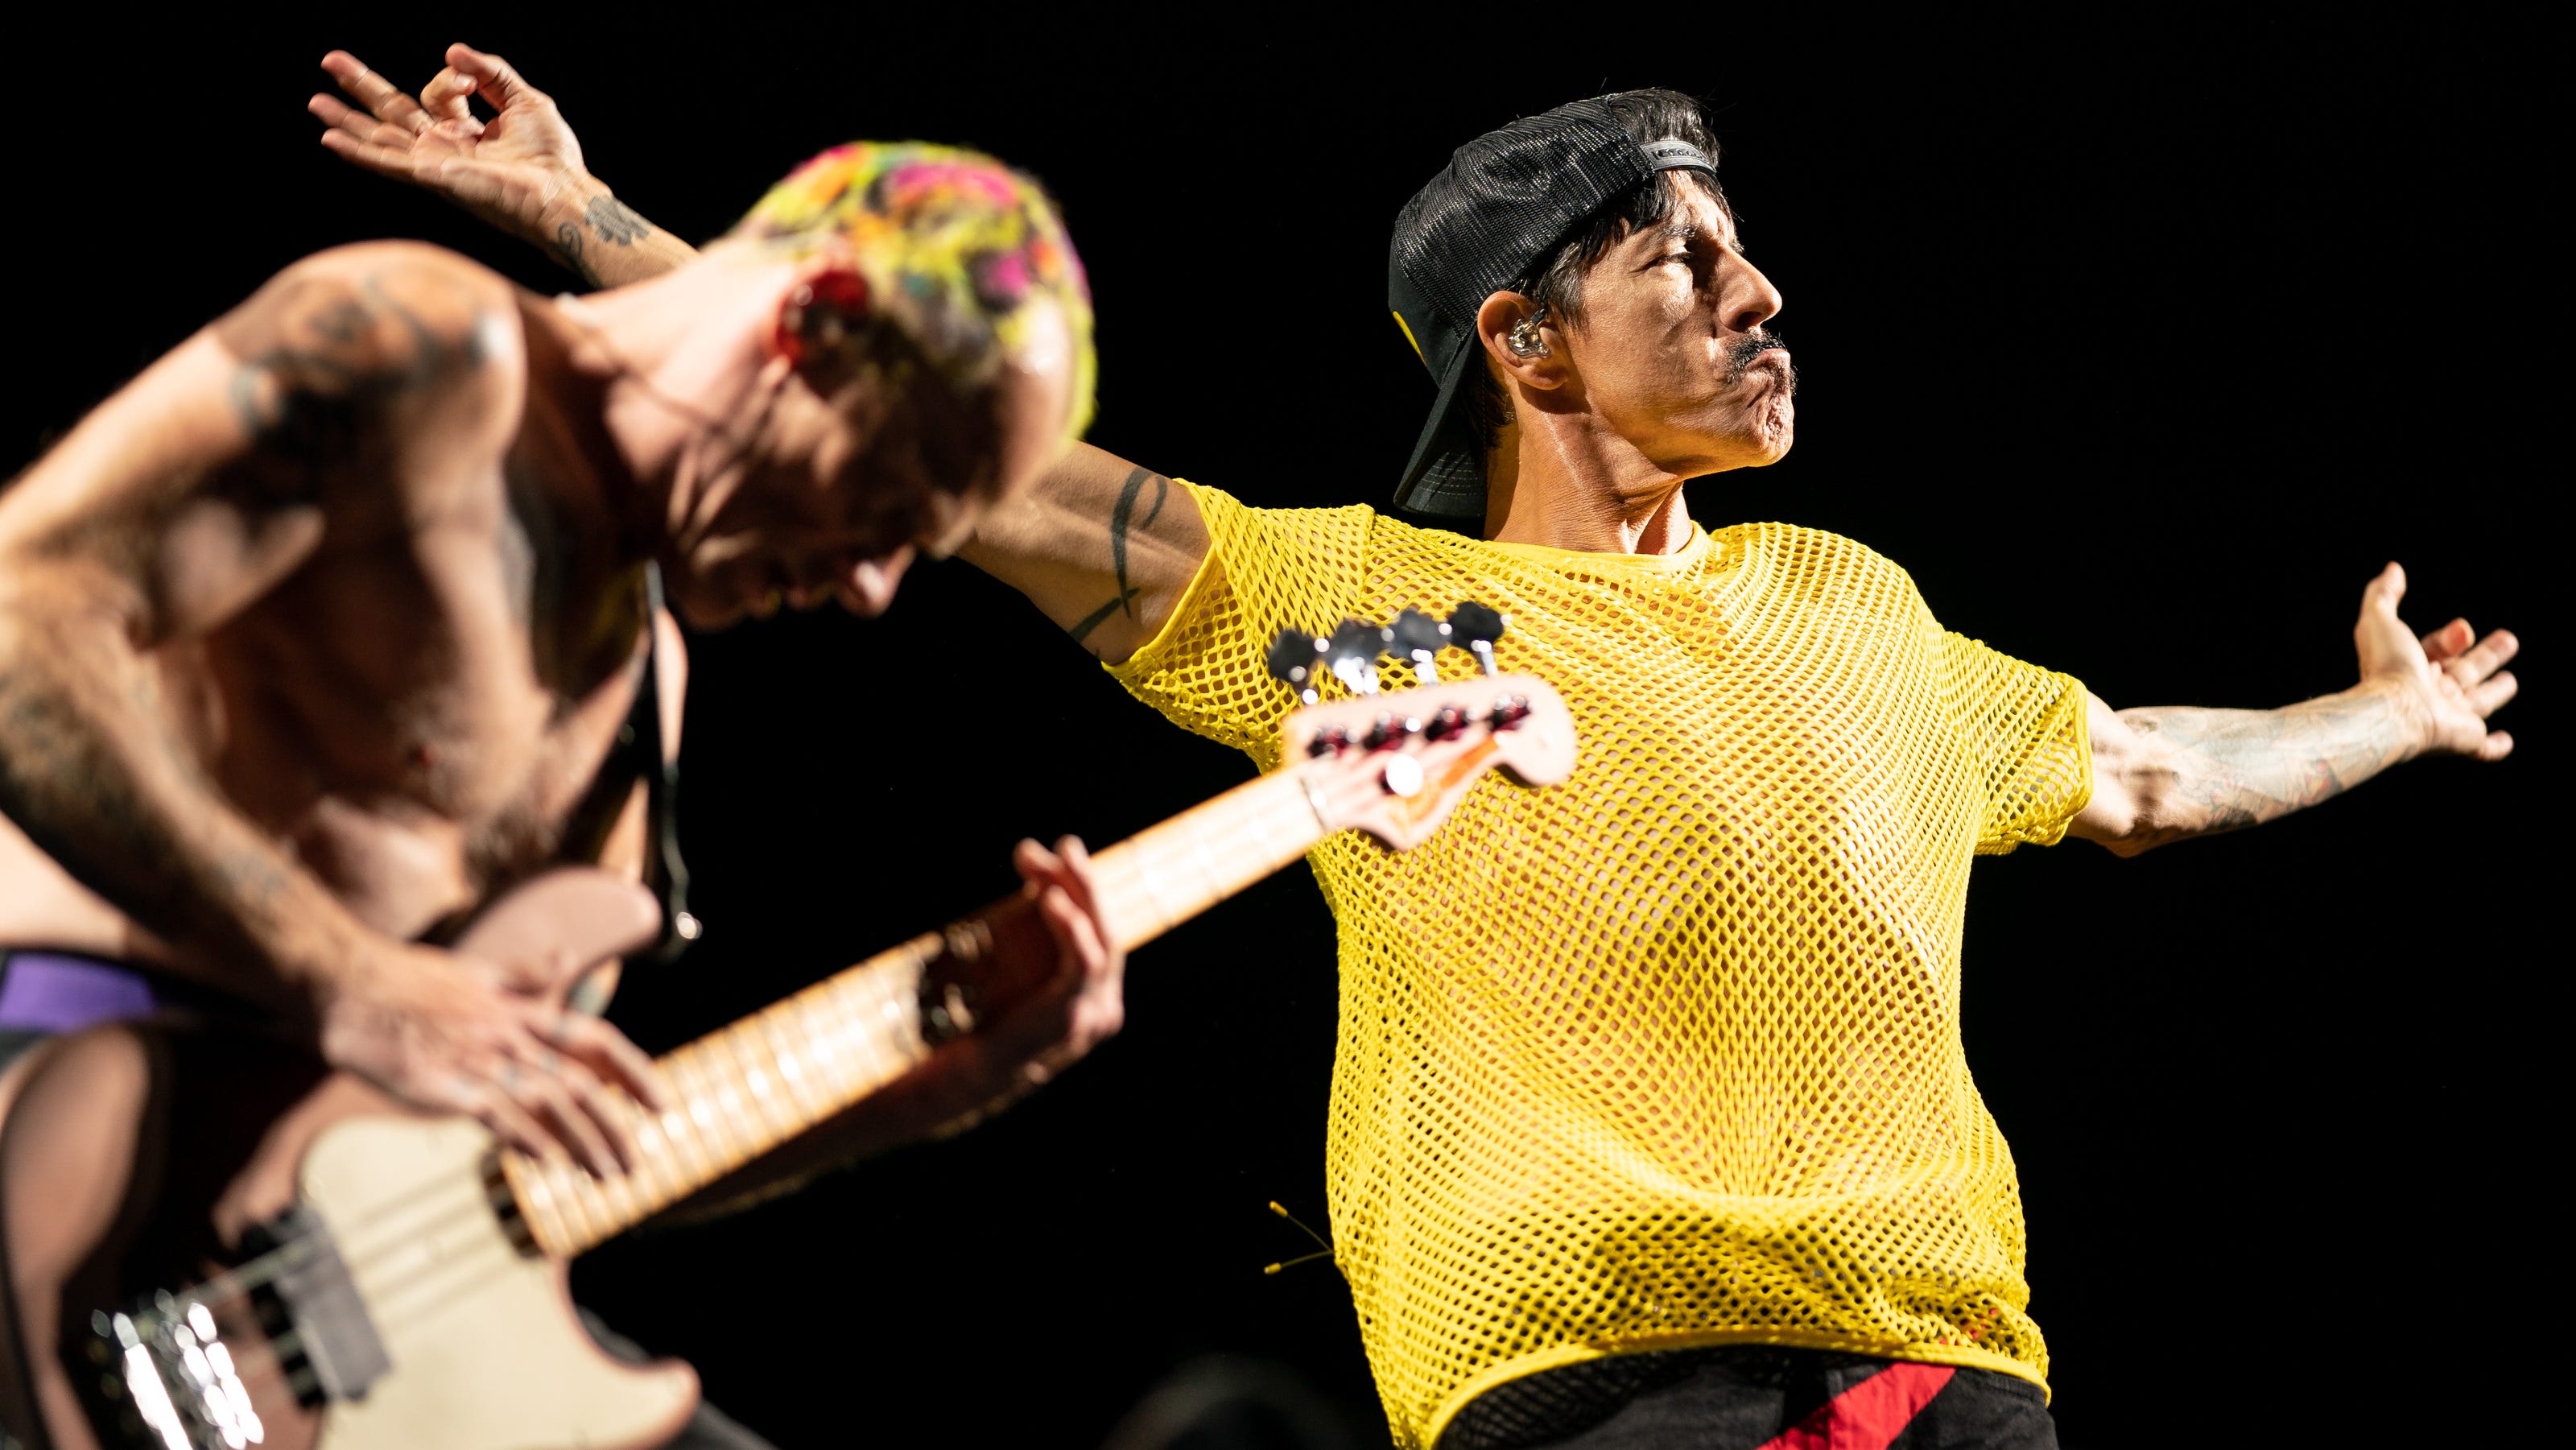 Uganda pianist støbt Red Hot Chili Peppers Nashville concert review: Reinvigorated rock night